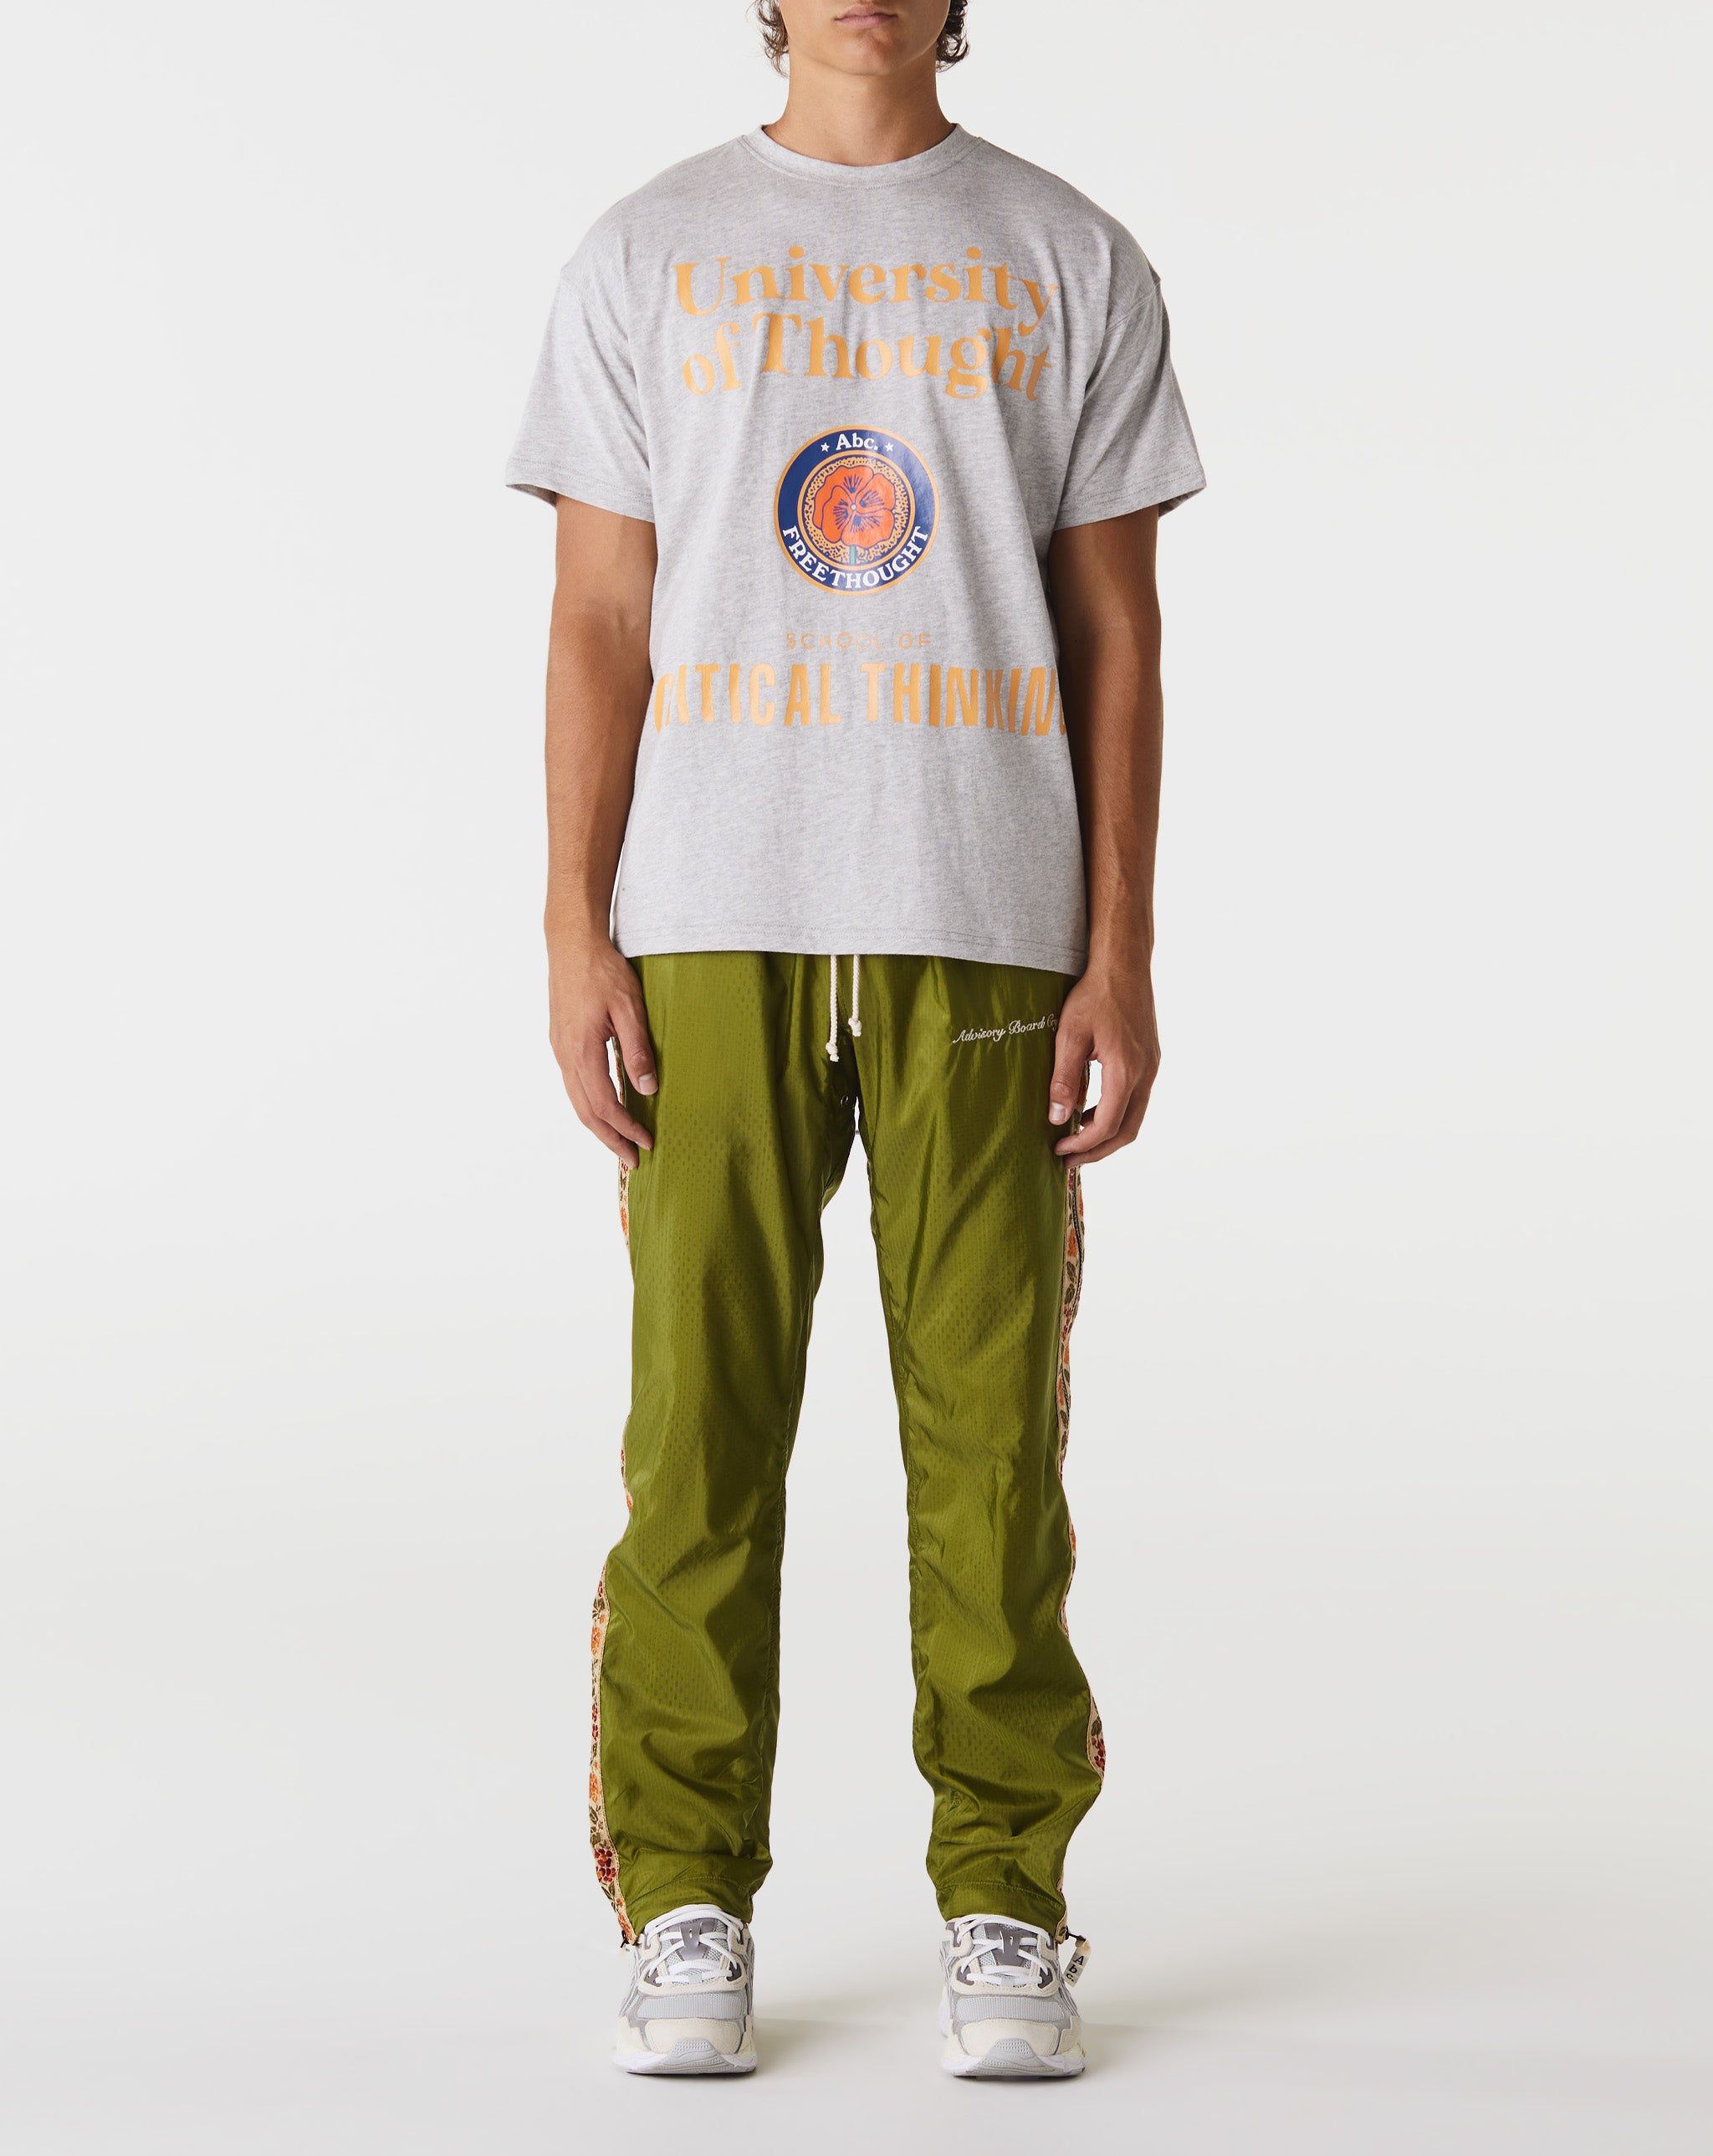 nike free run flyknit women taupe grey color code University T-Shirt  - Cheap Cerbe Jordan outlet